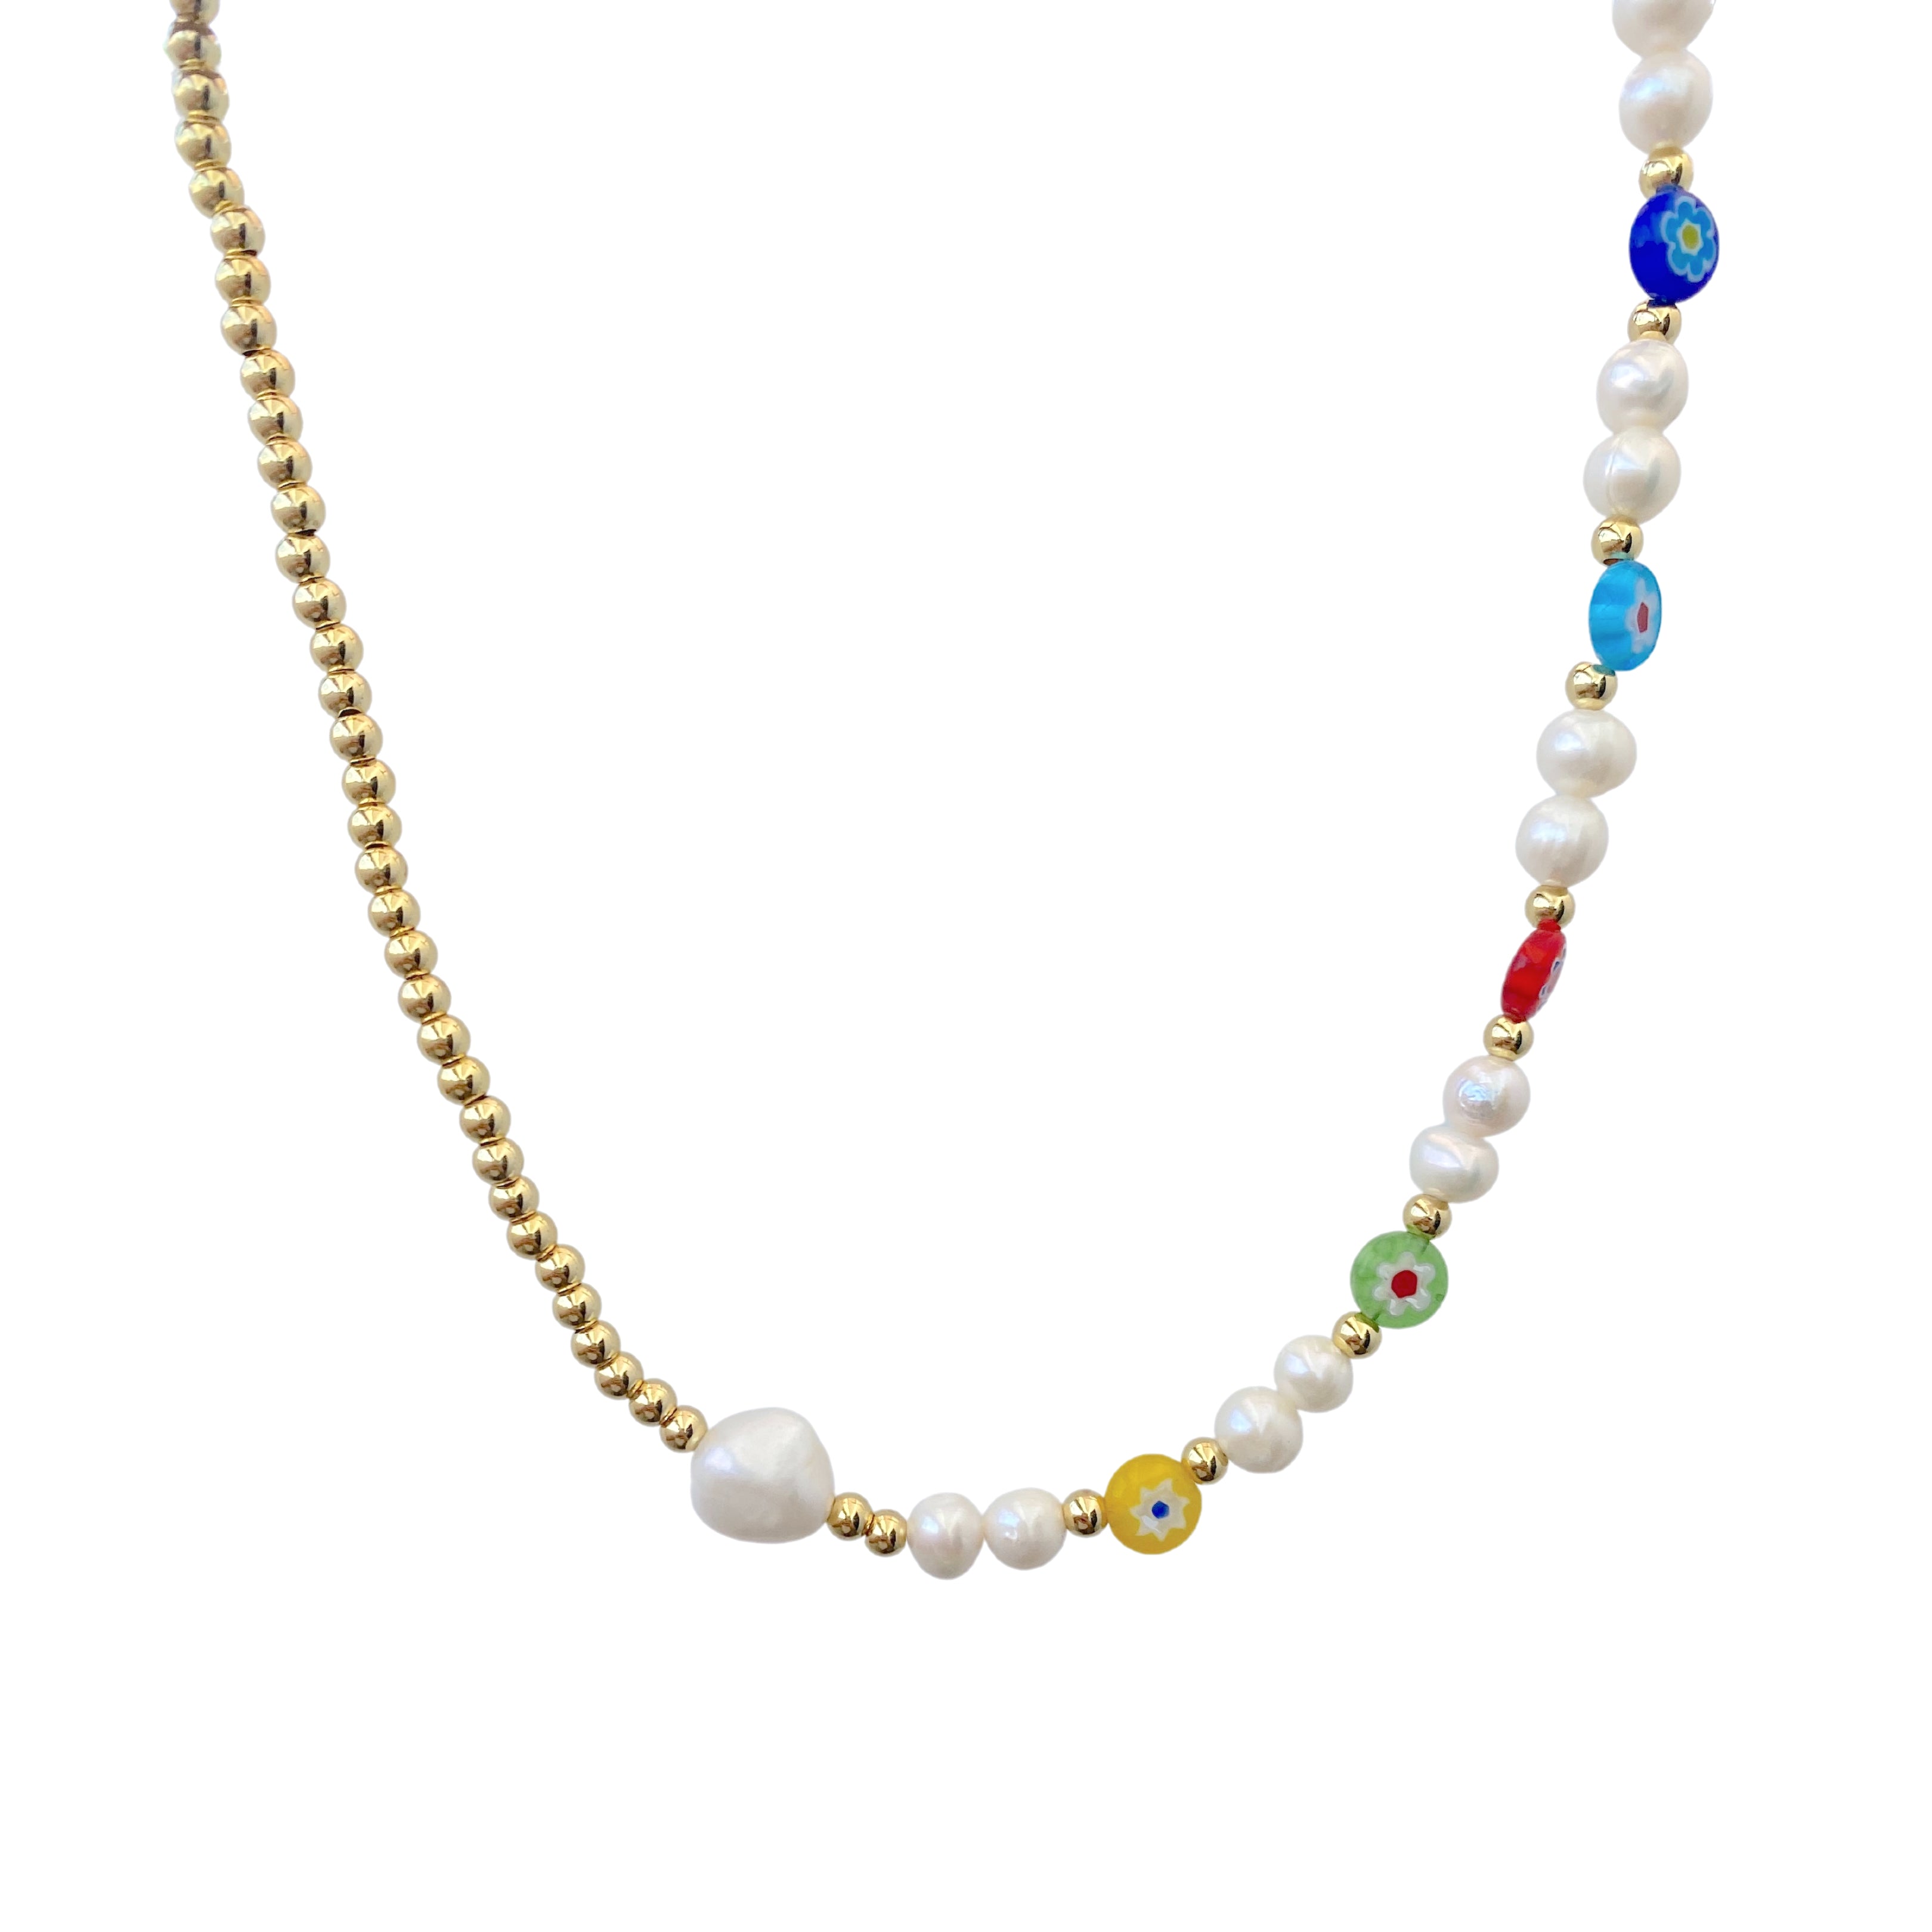 Millefiori Pearl necklace choker